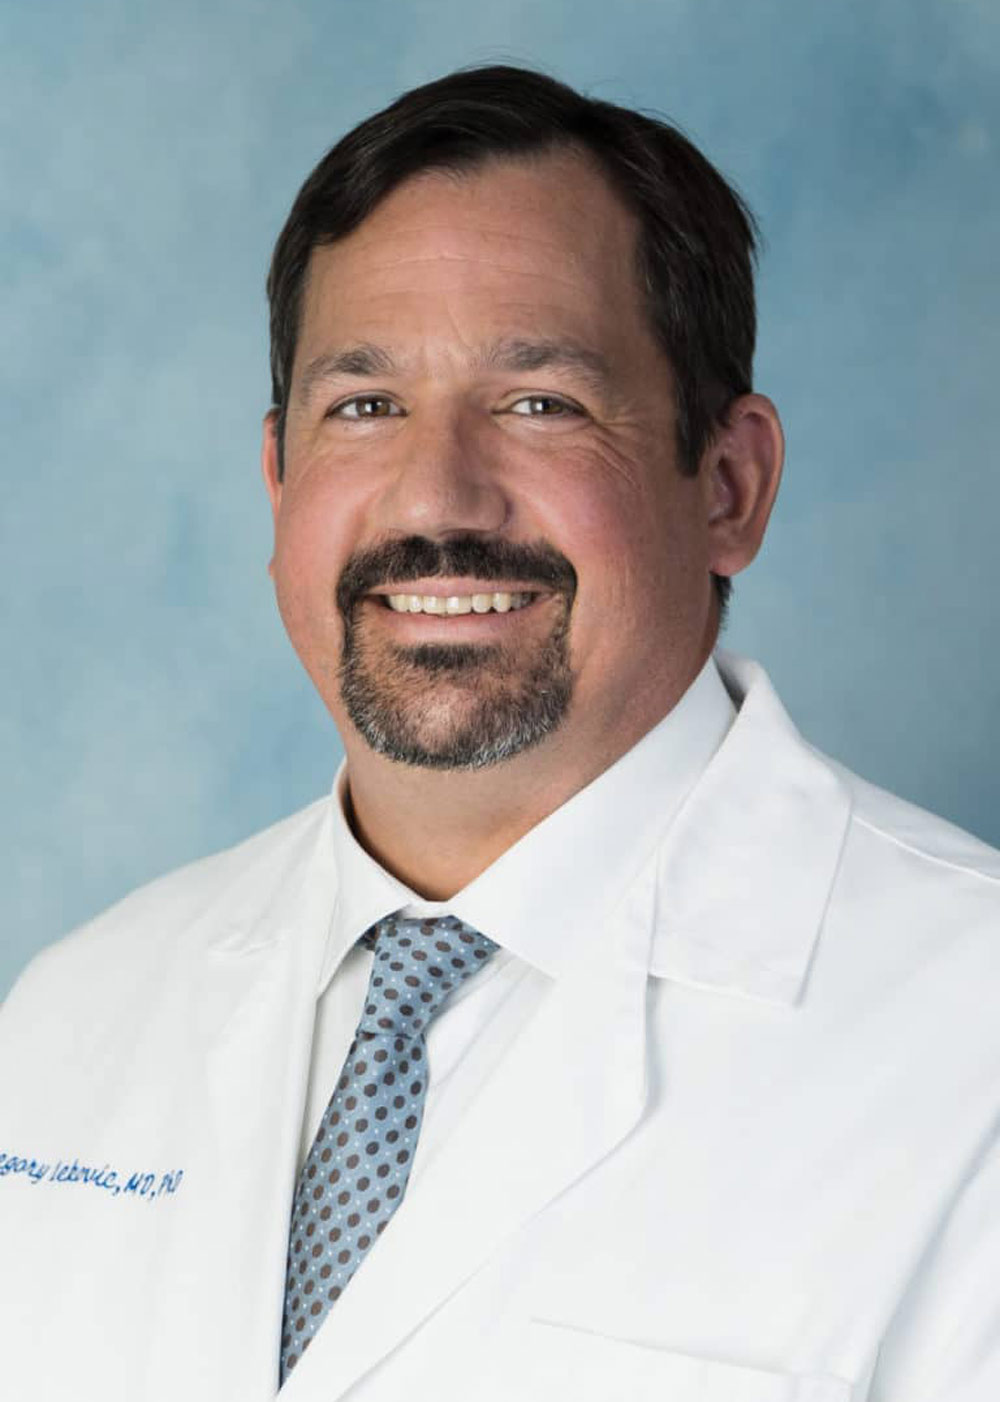 Dr. Lekovic, board-certified neurosurgeon in Los Angeles.